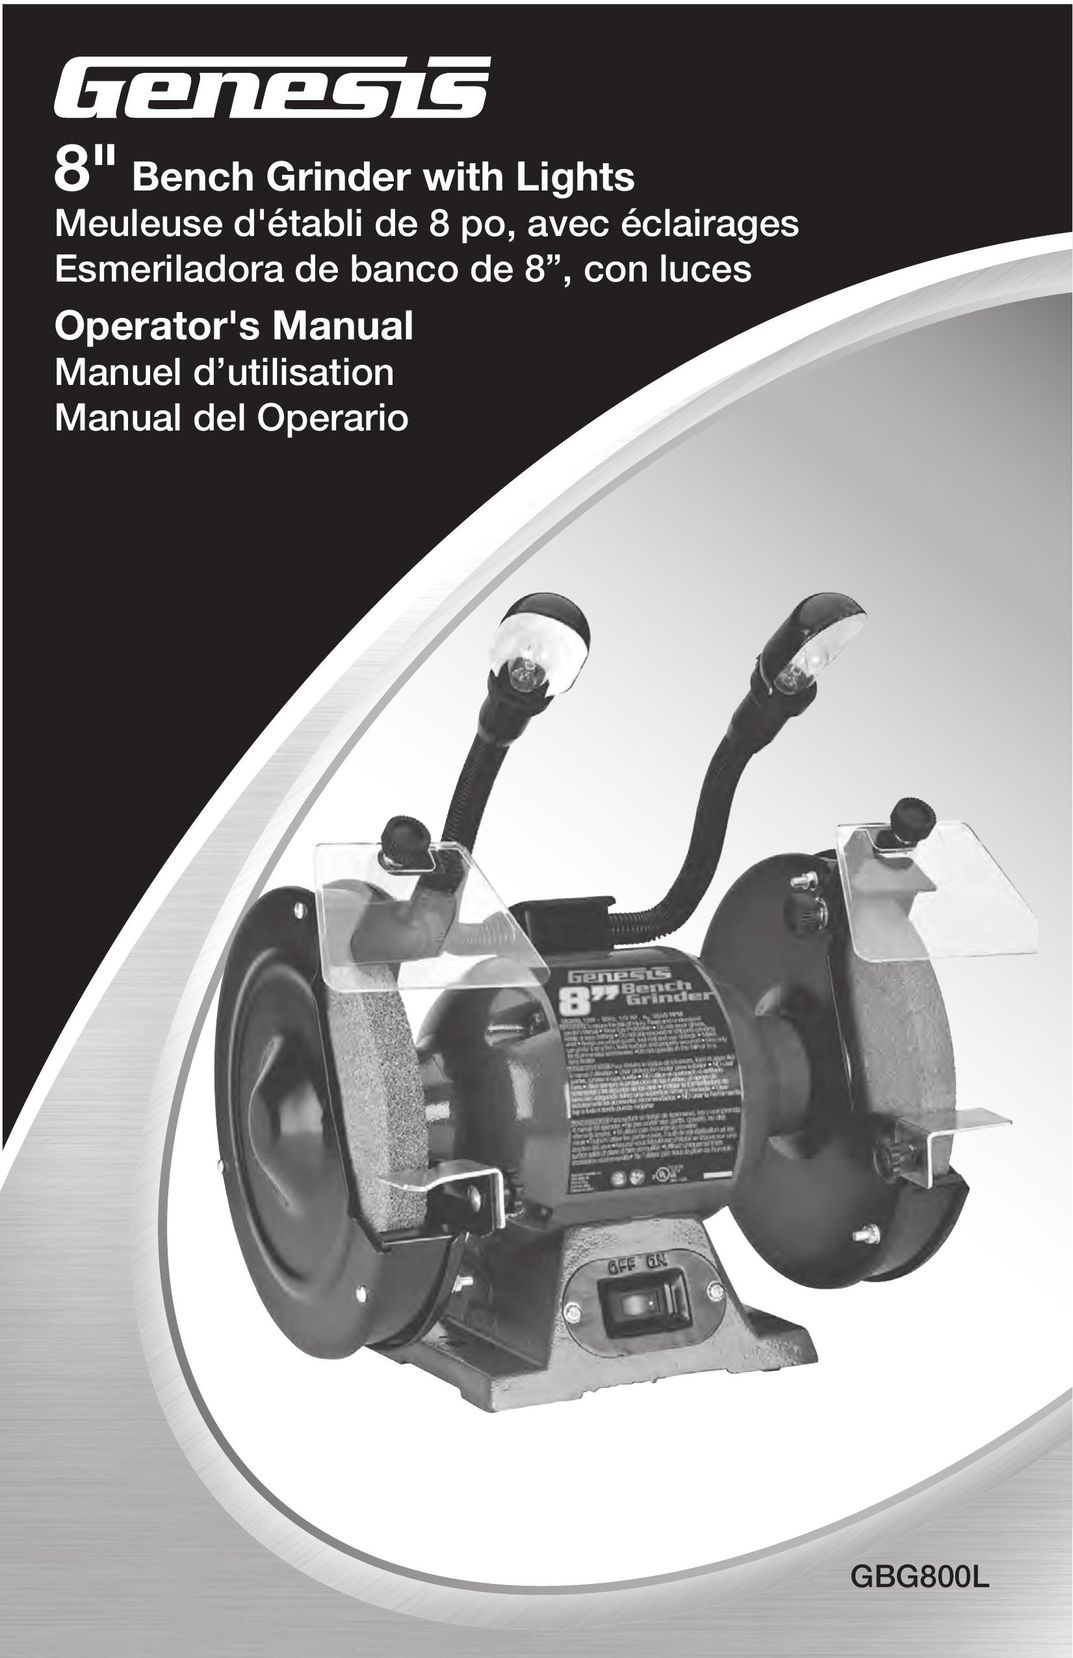 Genesis Advanced Technologies GBG800L Grinder User Manual